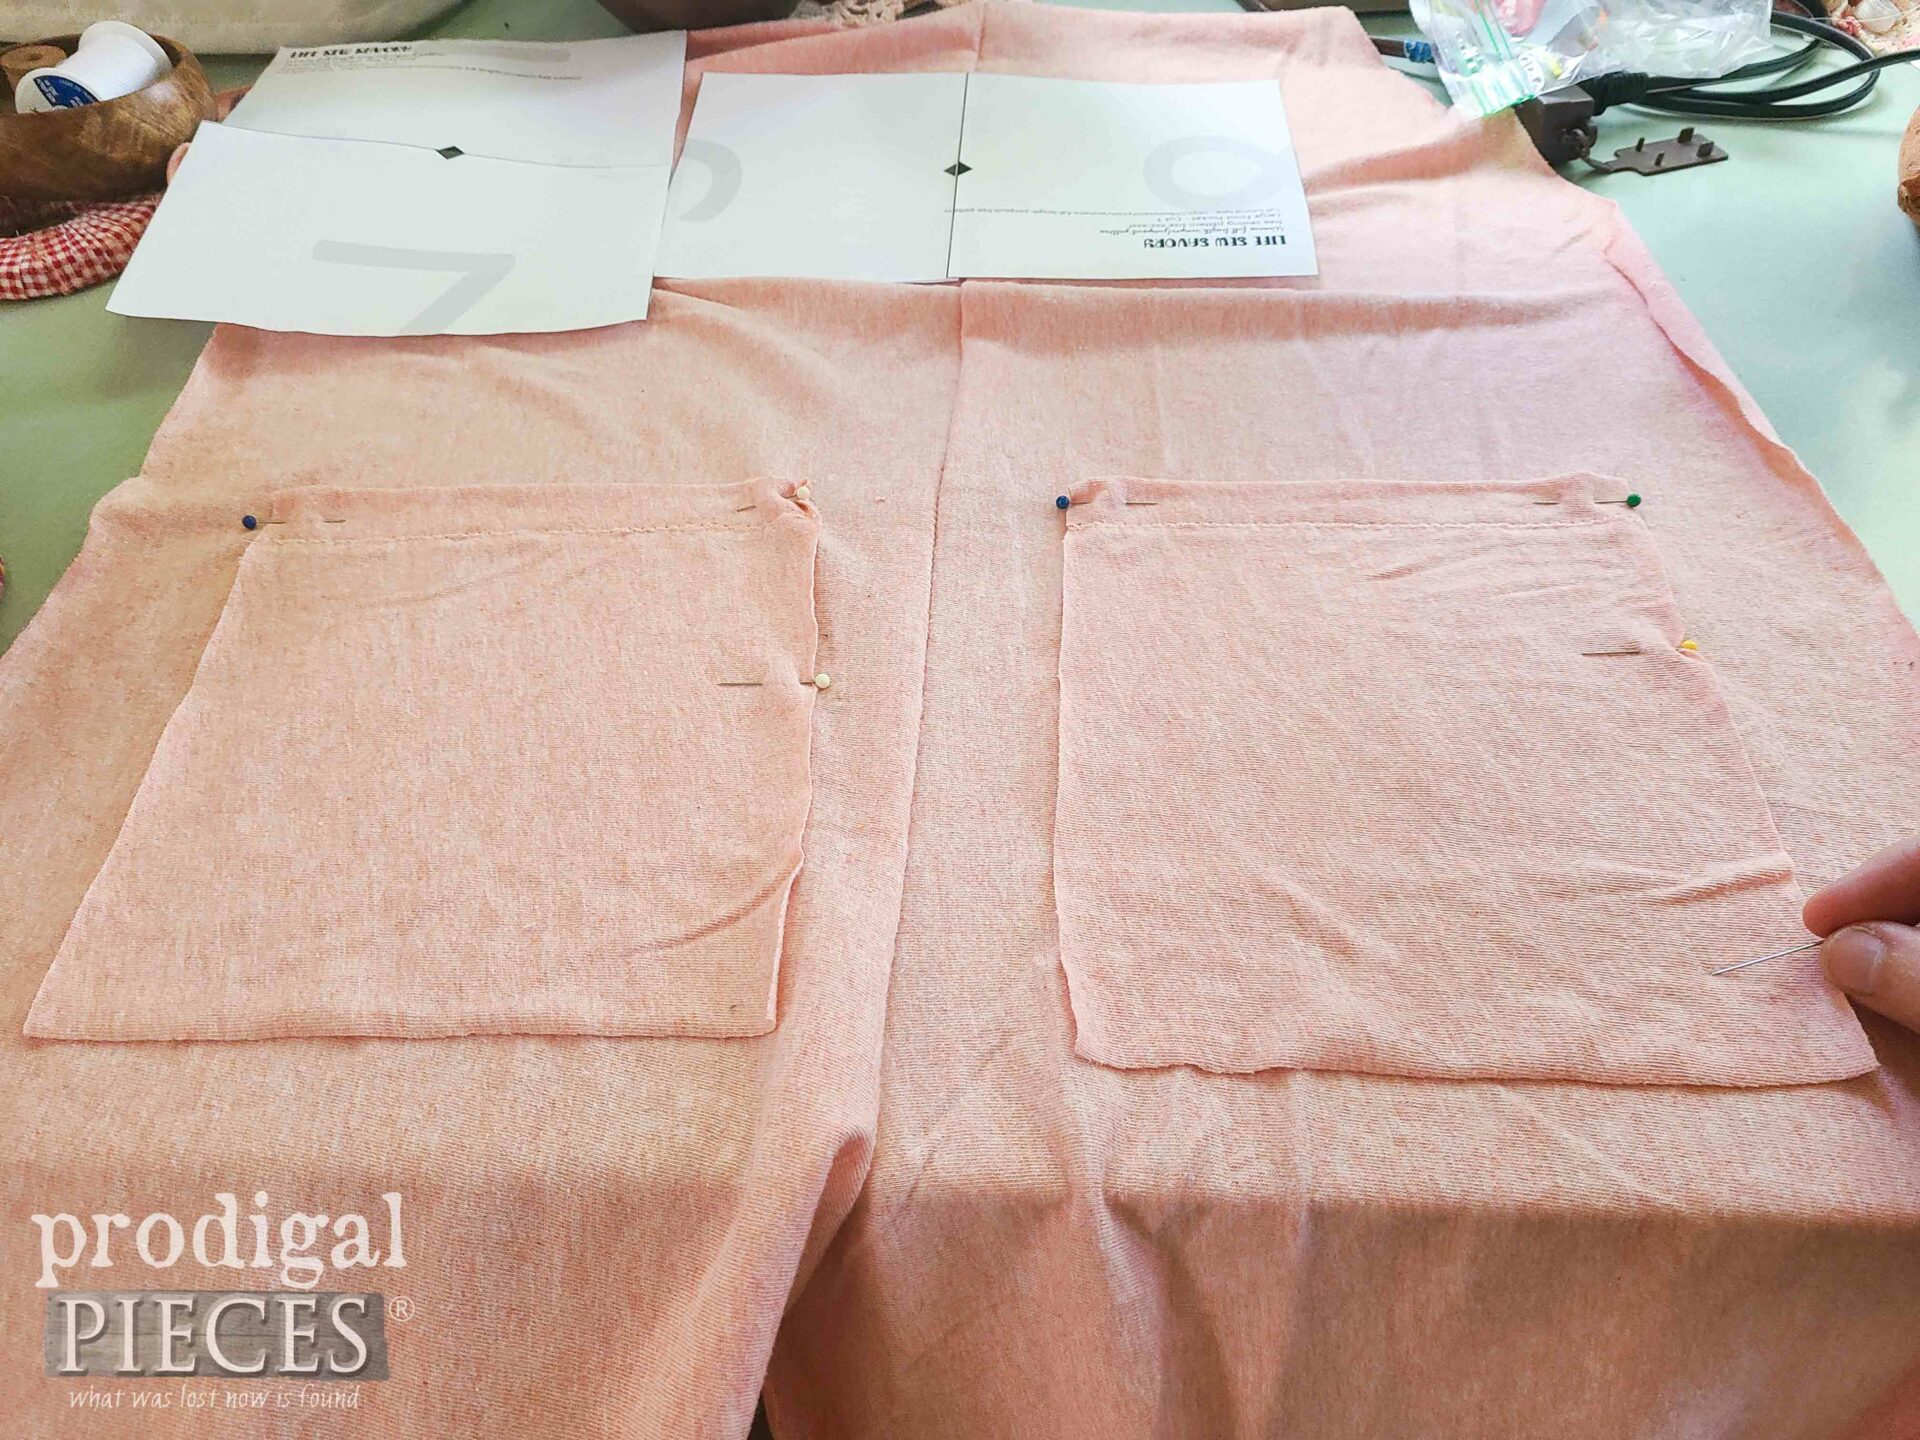 Placing DIY Refashioned Jumper Pockets | prodigalpieces.com #prodigalpieces